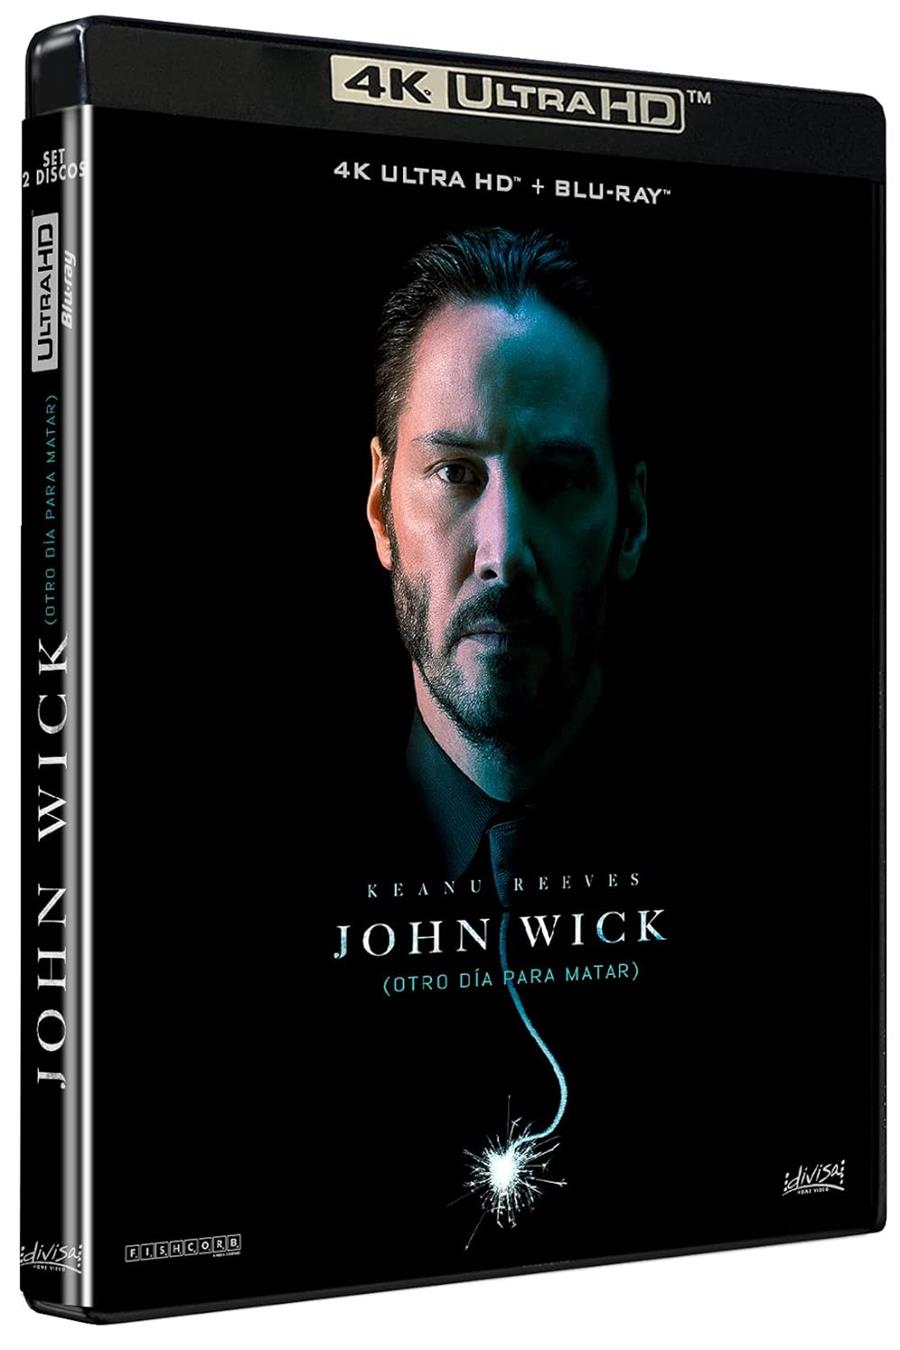 John Wick 1 (Otro Día para Matar) - 4K UHD | 8421394301238 | Chad Stahelski, David Leitch